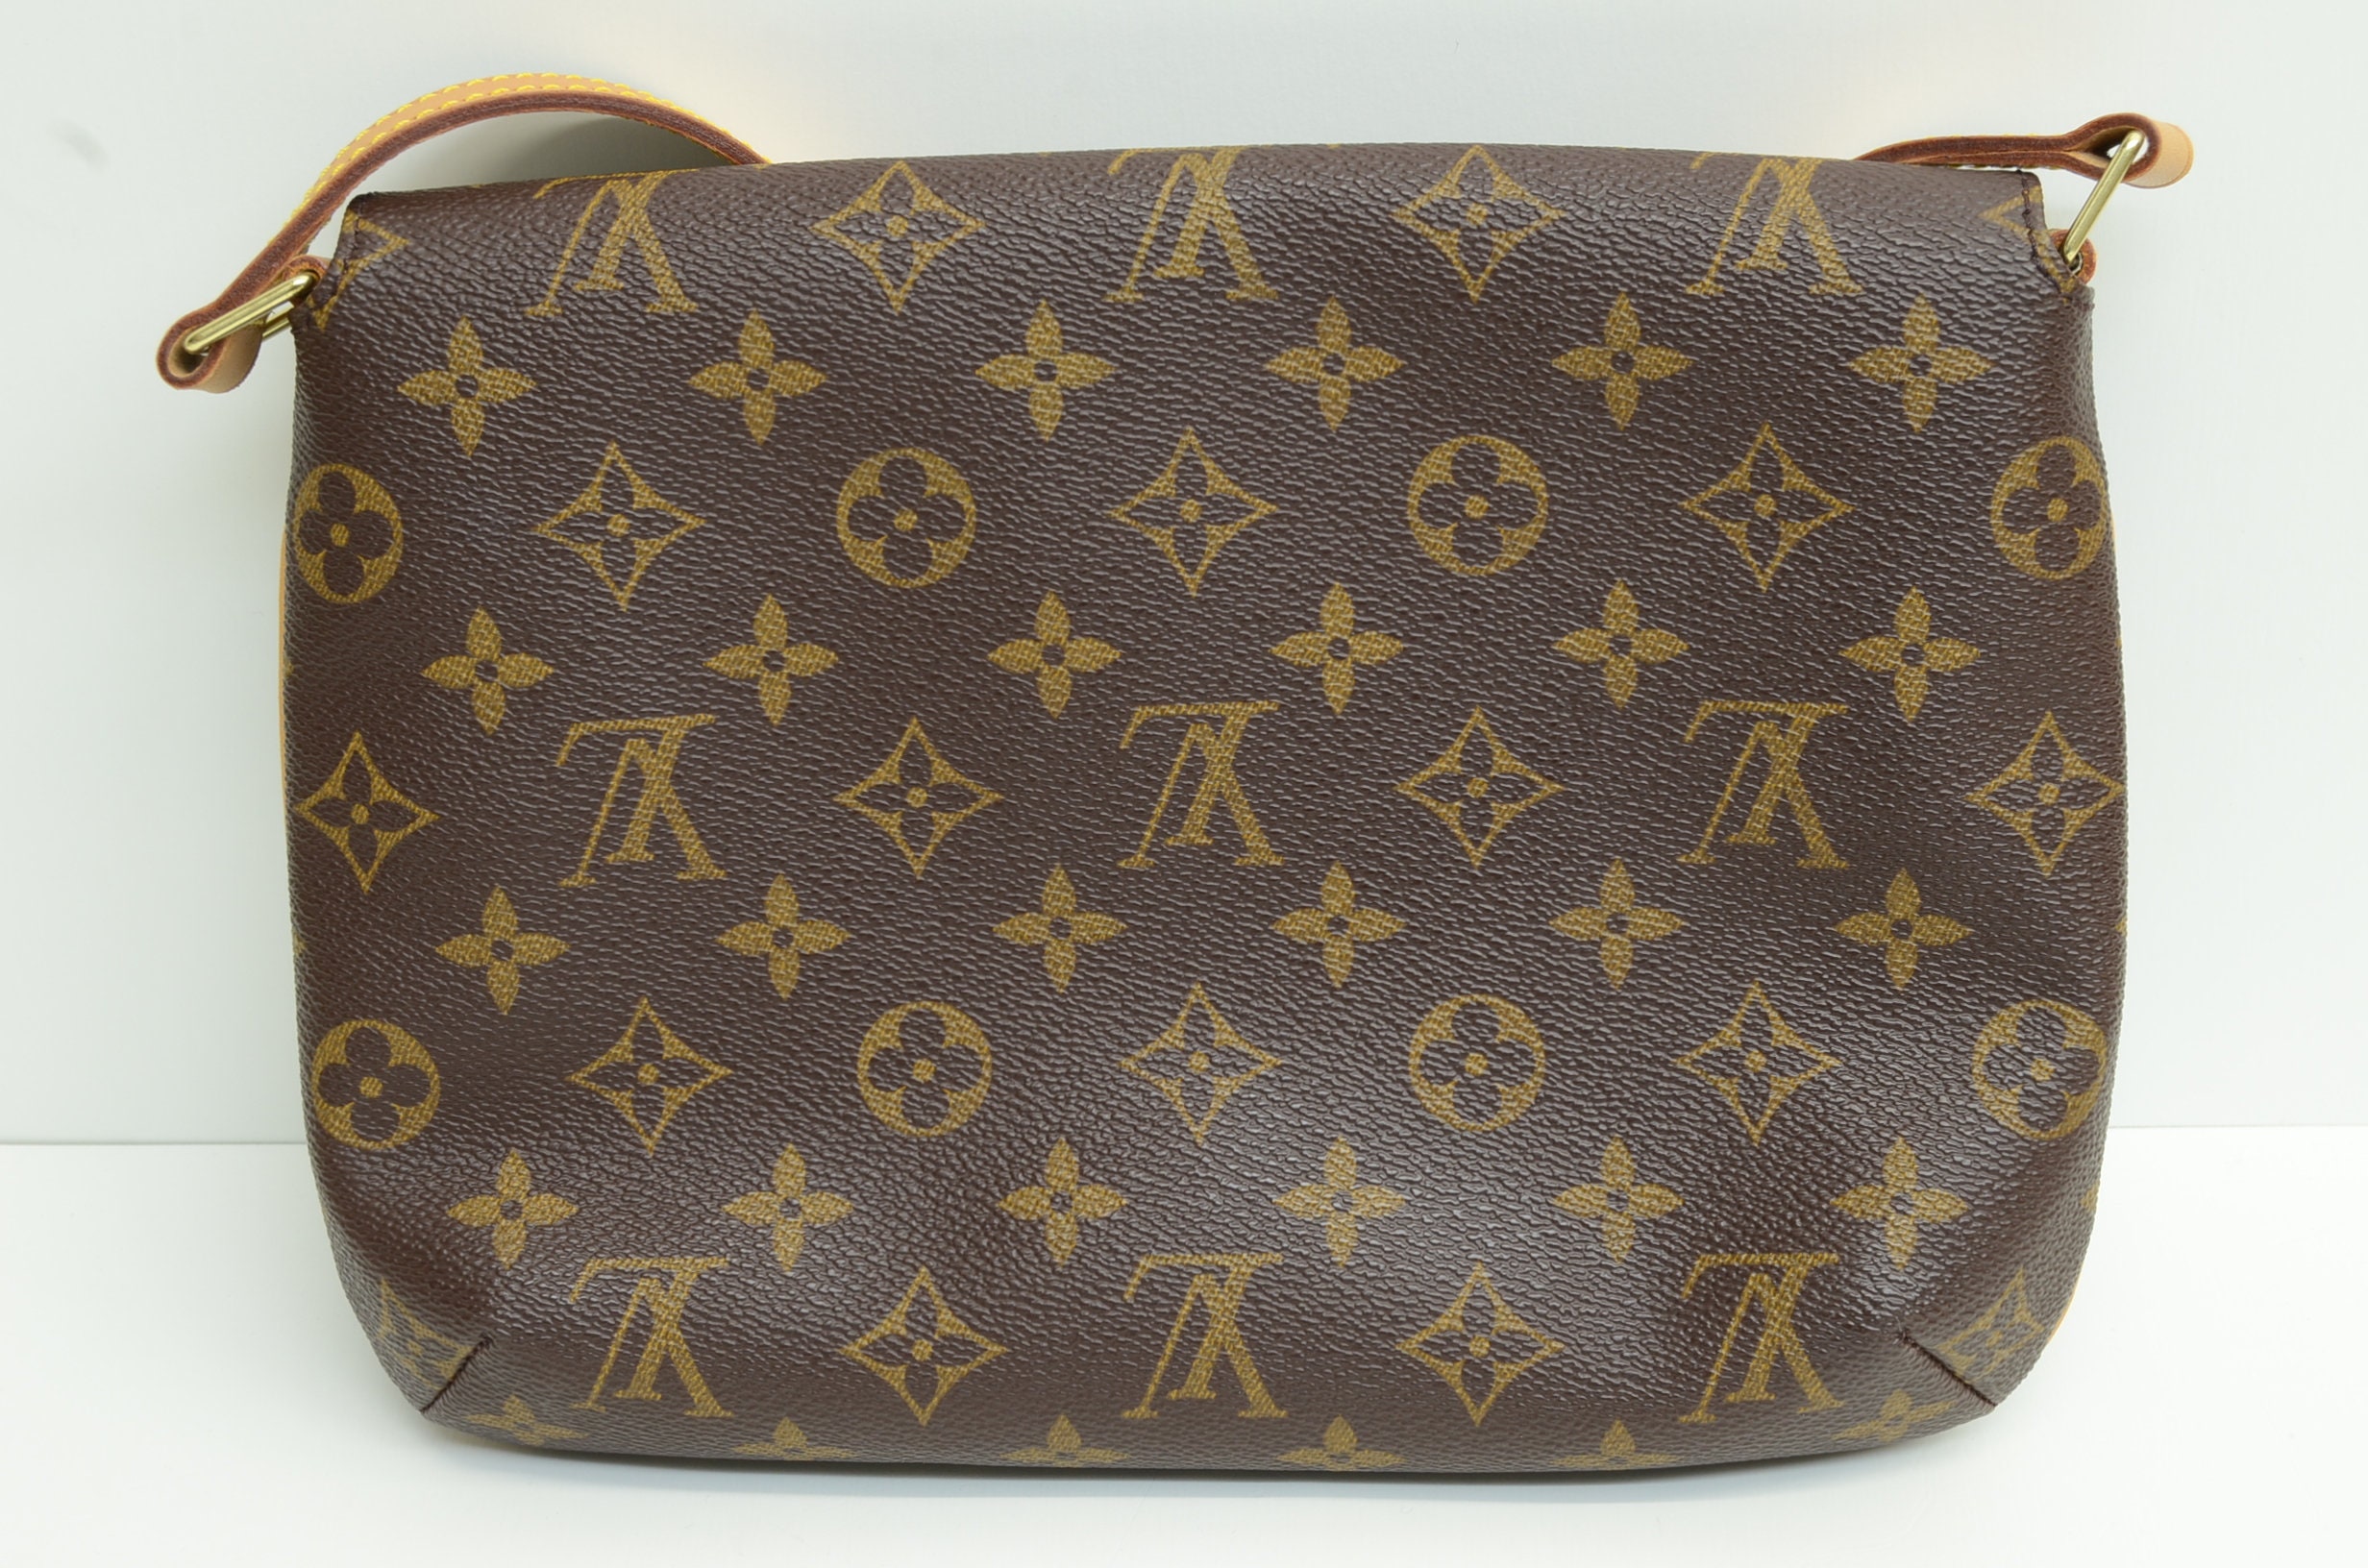 Shop for Louis Vuitton Monogram Canvas Leather Tango Crossbody Bag